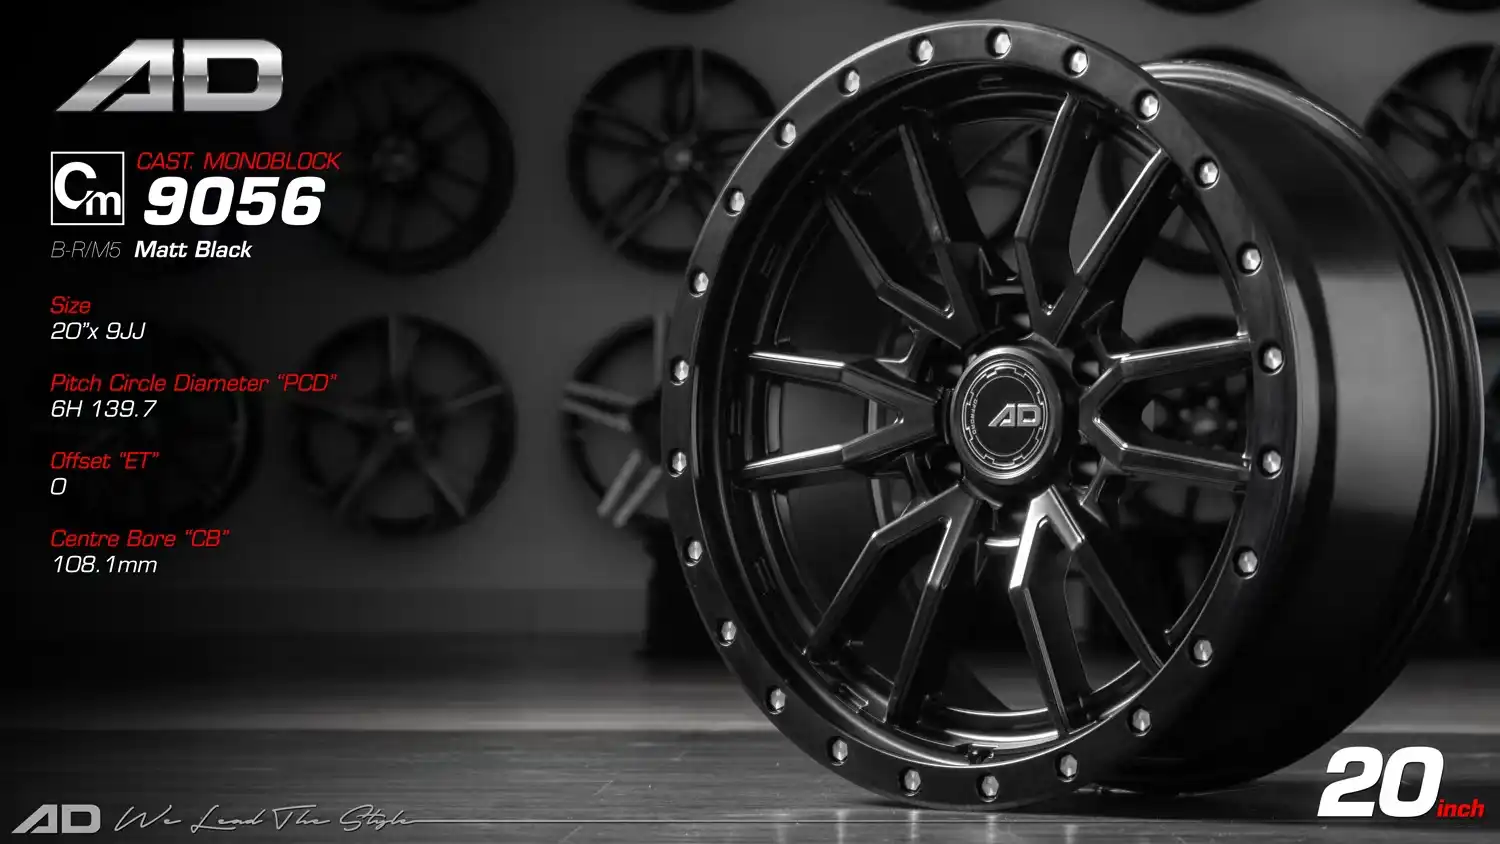 Ad wheels | Cast Monoblock 9056 20 inch 6H139.7